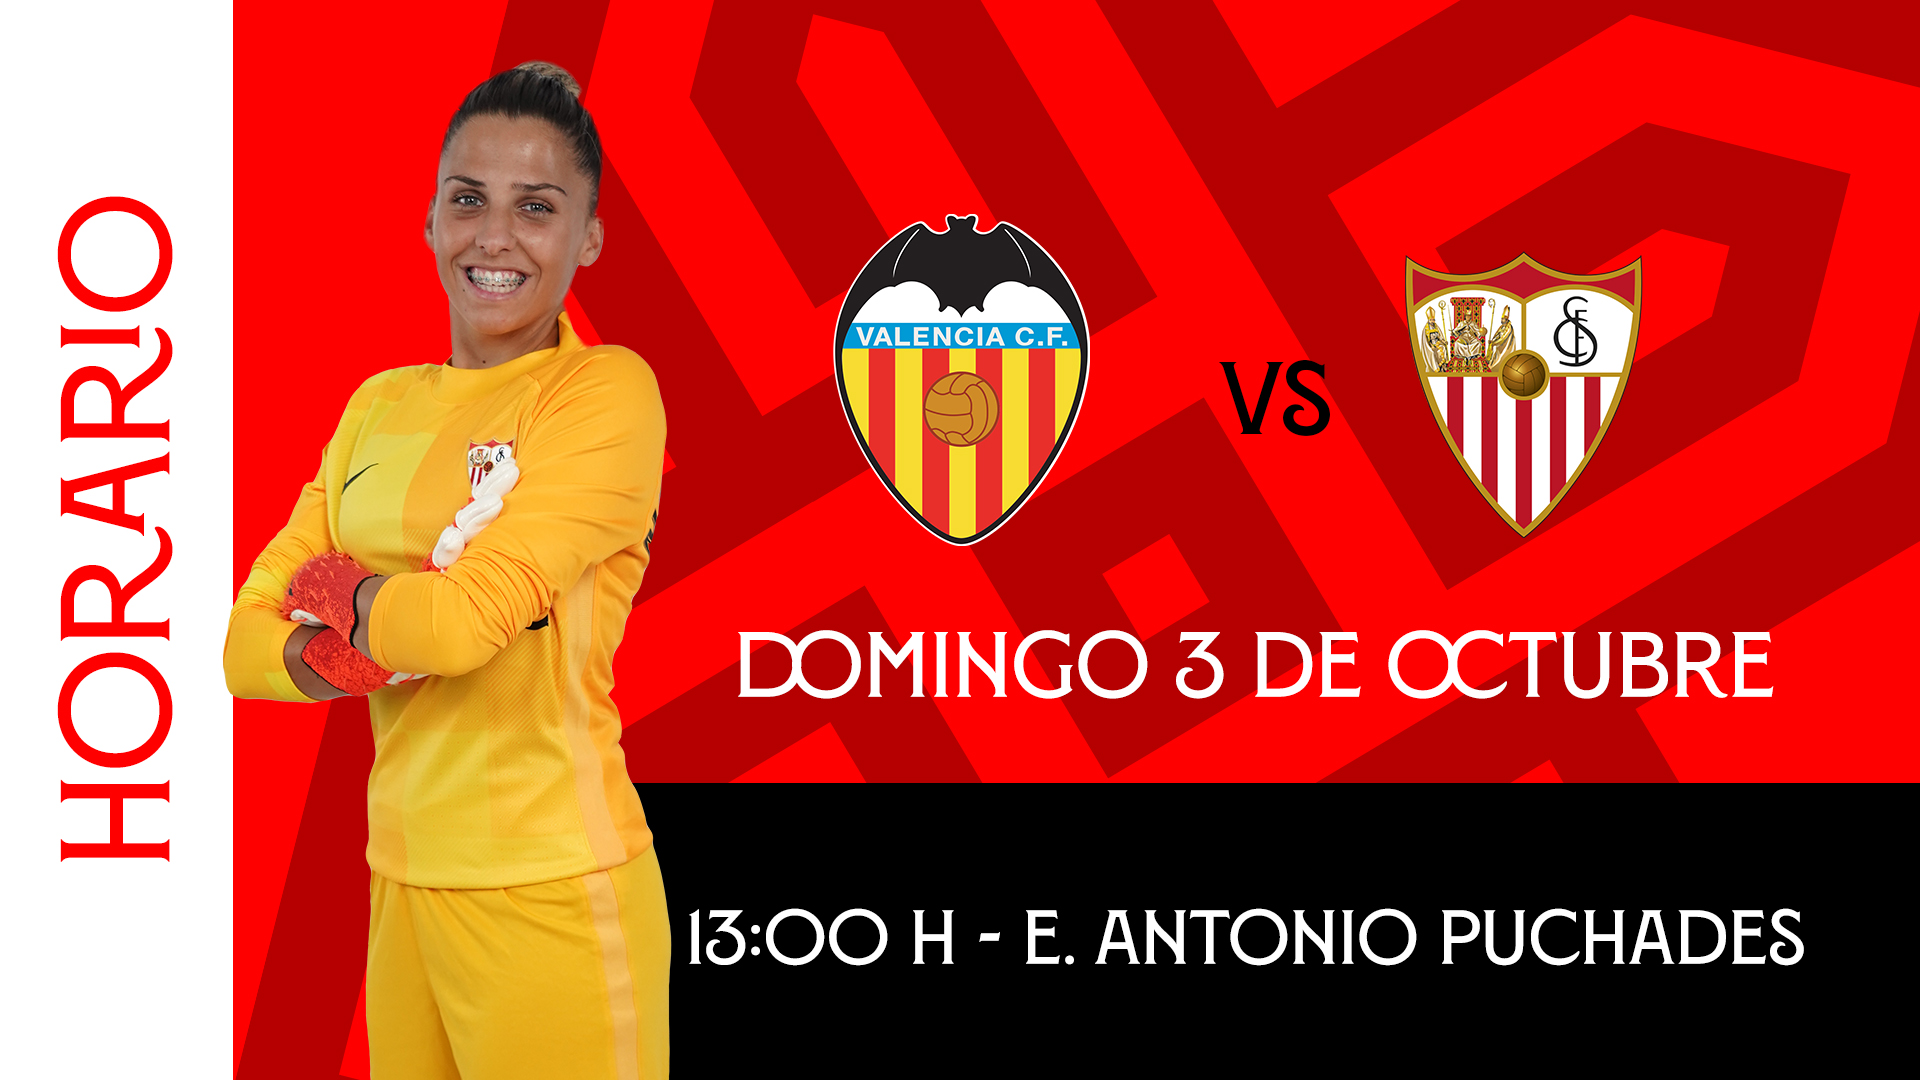 The women's team will visit Valencia CF women on Sunday